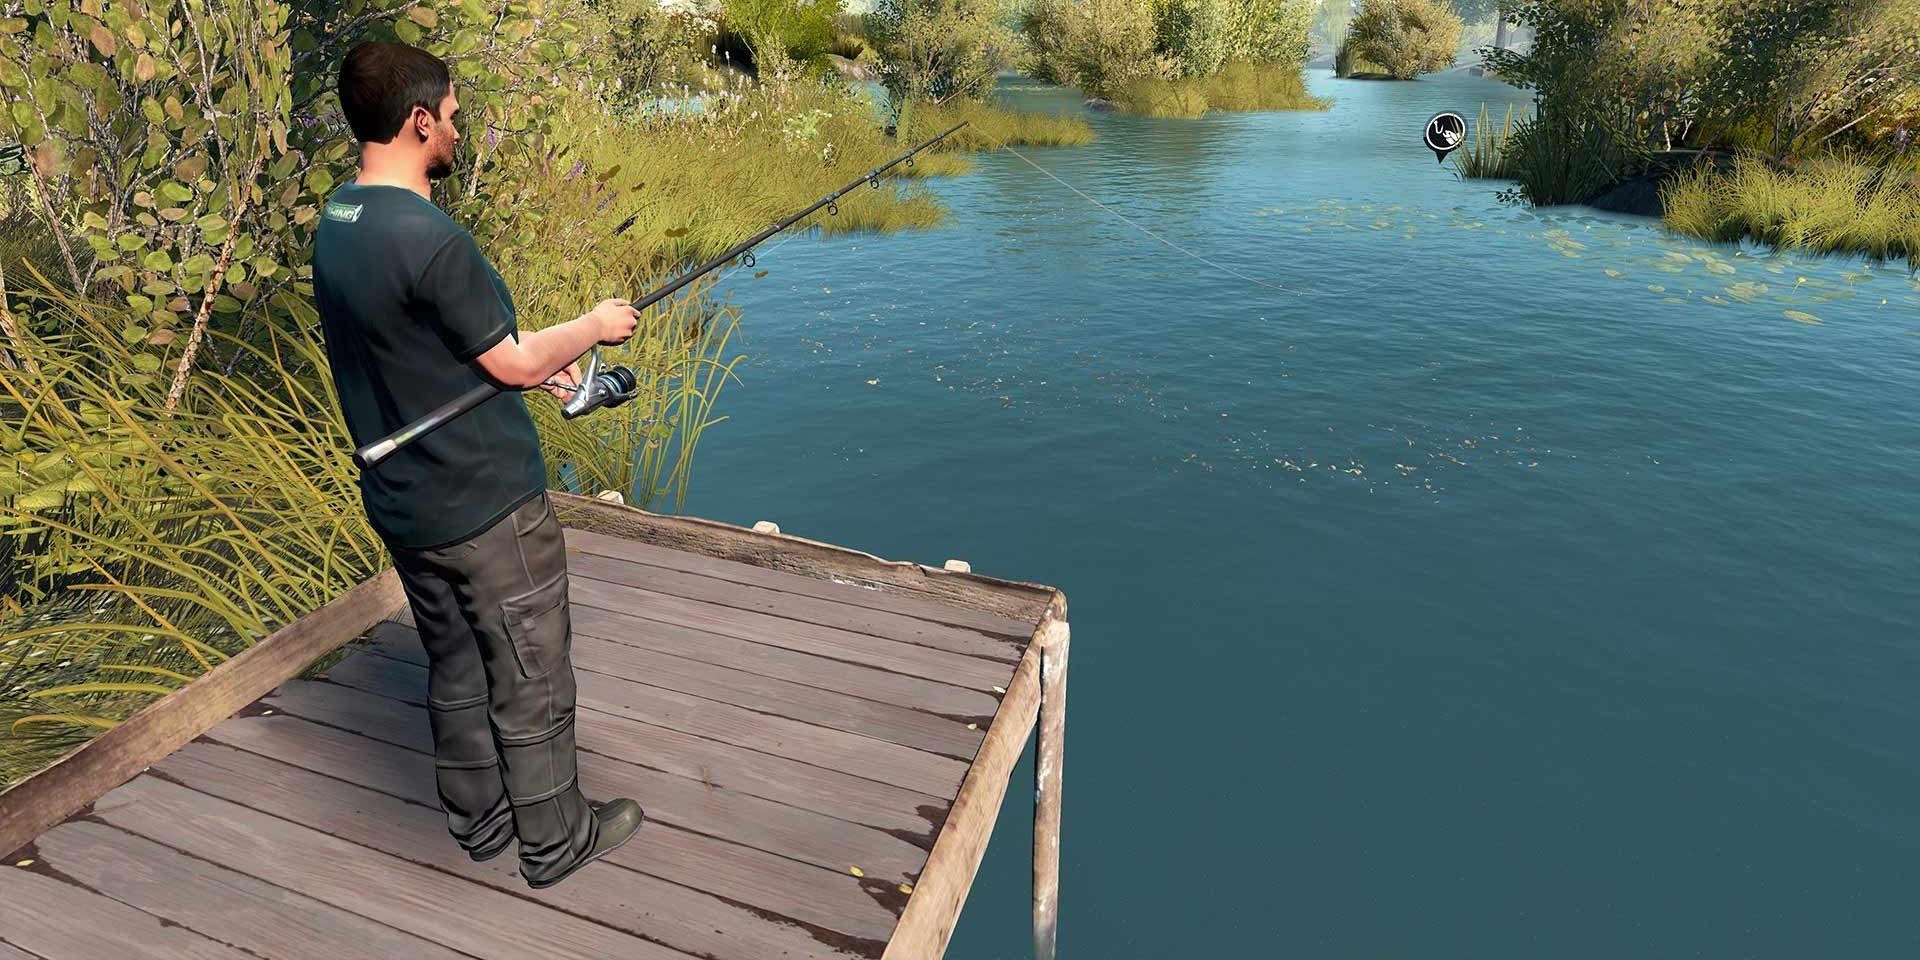 Euro Fishing Playstation man on dock casting line into lake